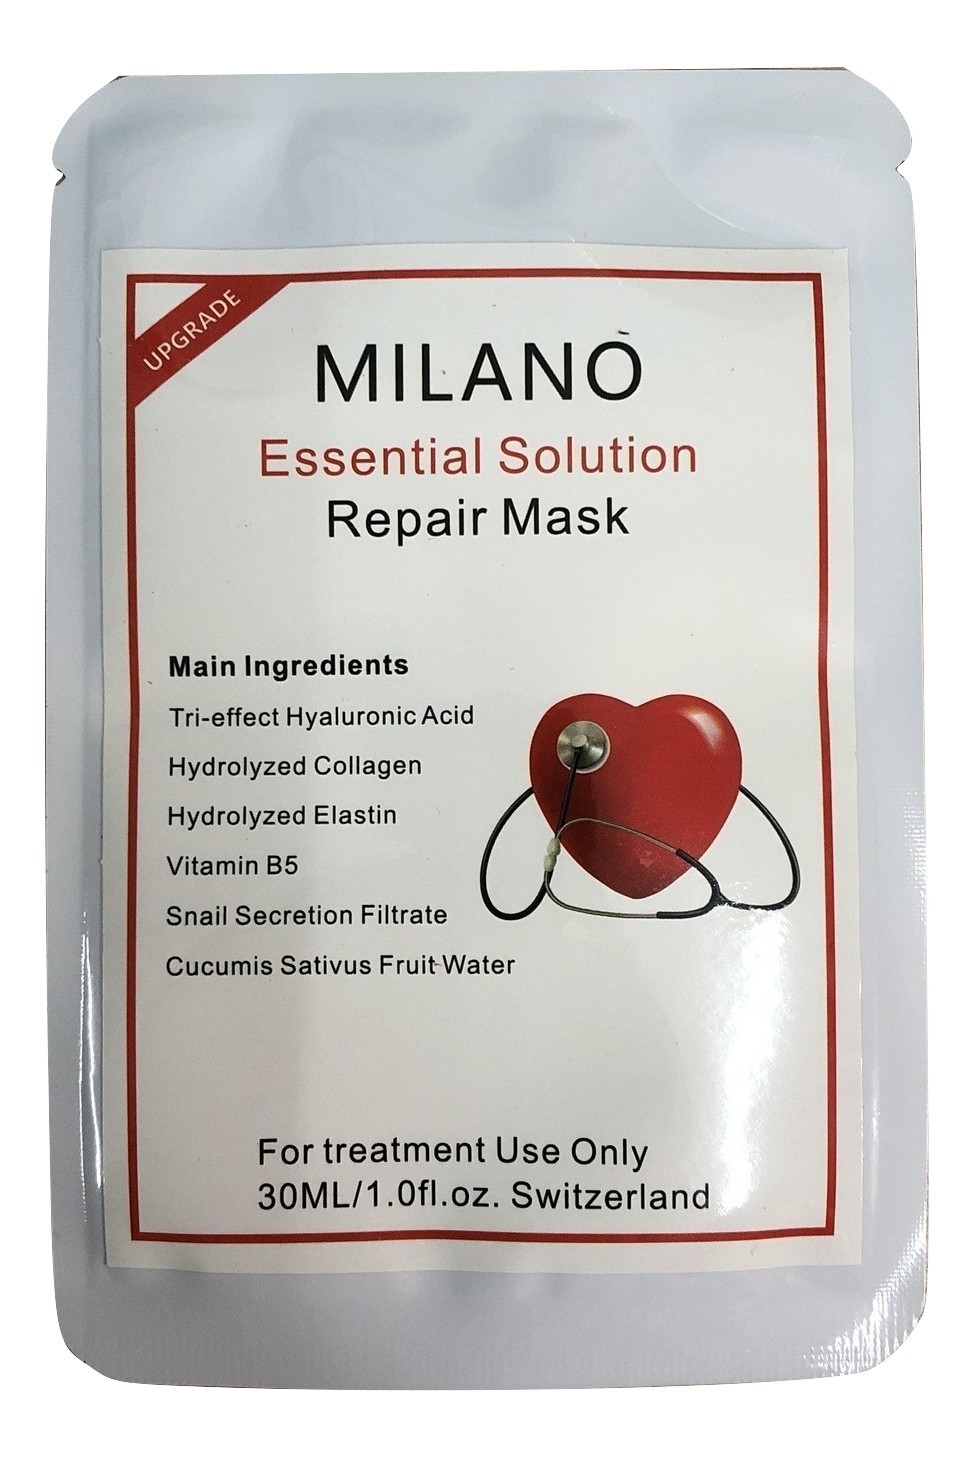 Milano Essential Solution Repair Mask, 30ml, Buy 10 Get 1 Free/Buy 20 Get 3 Free